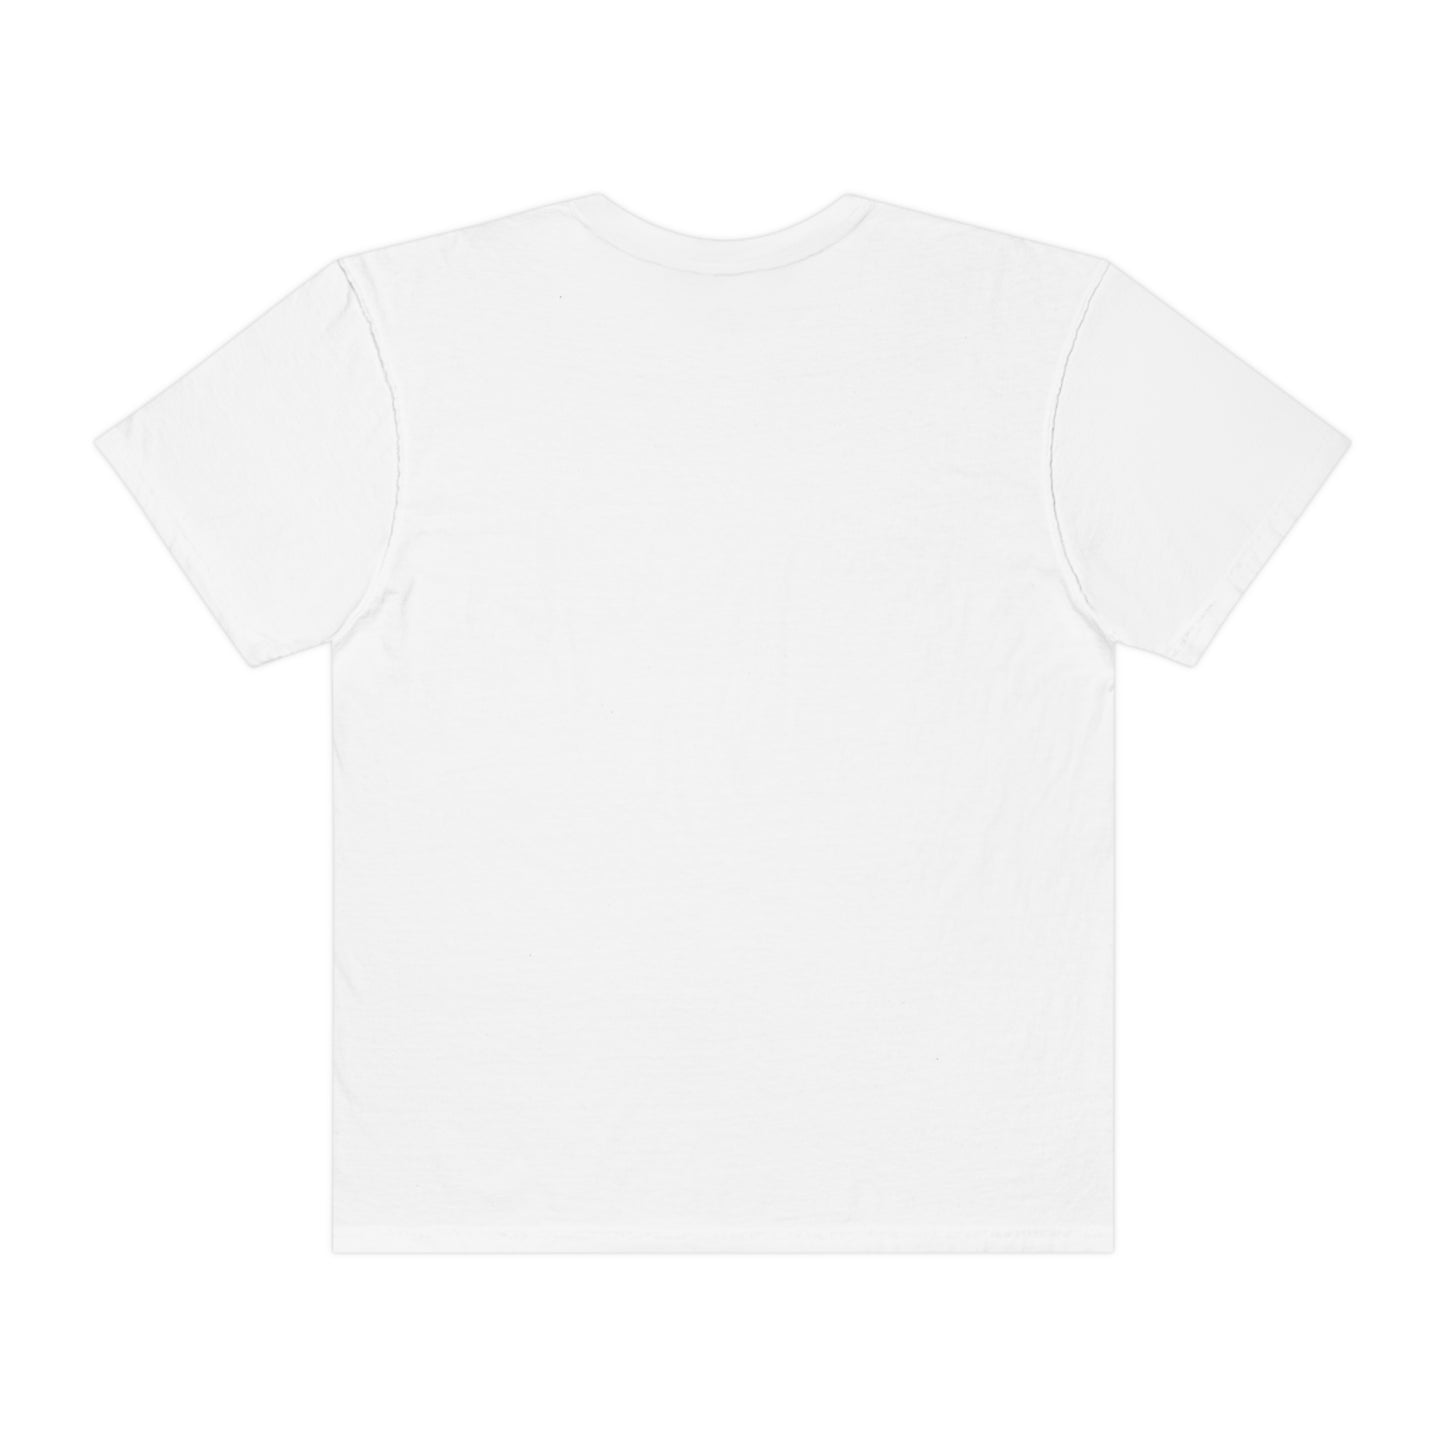 LiterallyUs Unisex Garment-Dyed T-shirt